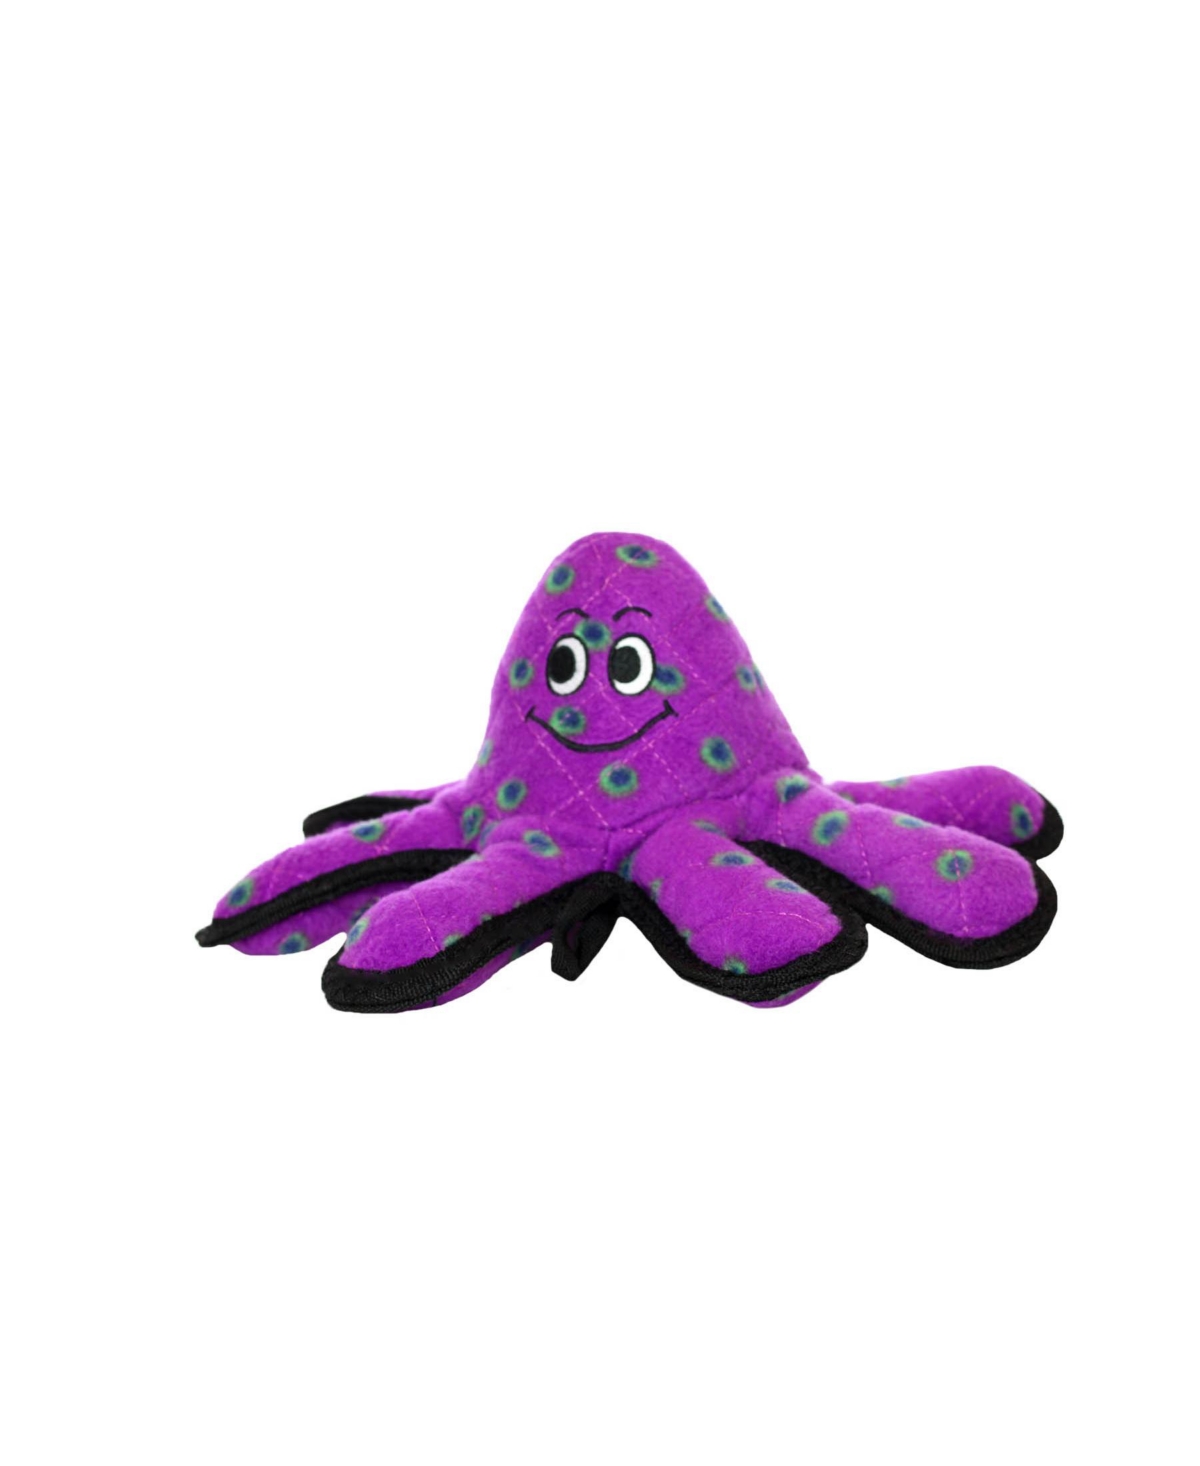 Ocean Creature Small Octopus, Dog Toy - Purple